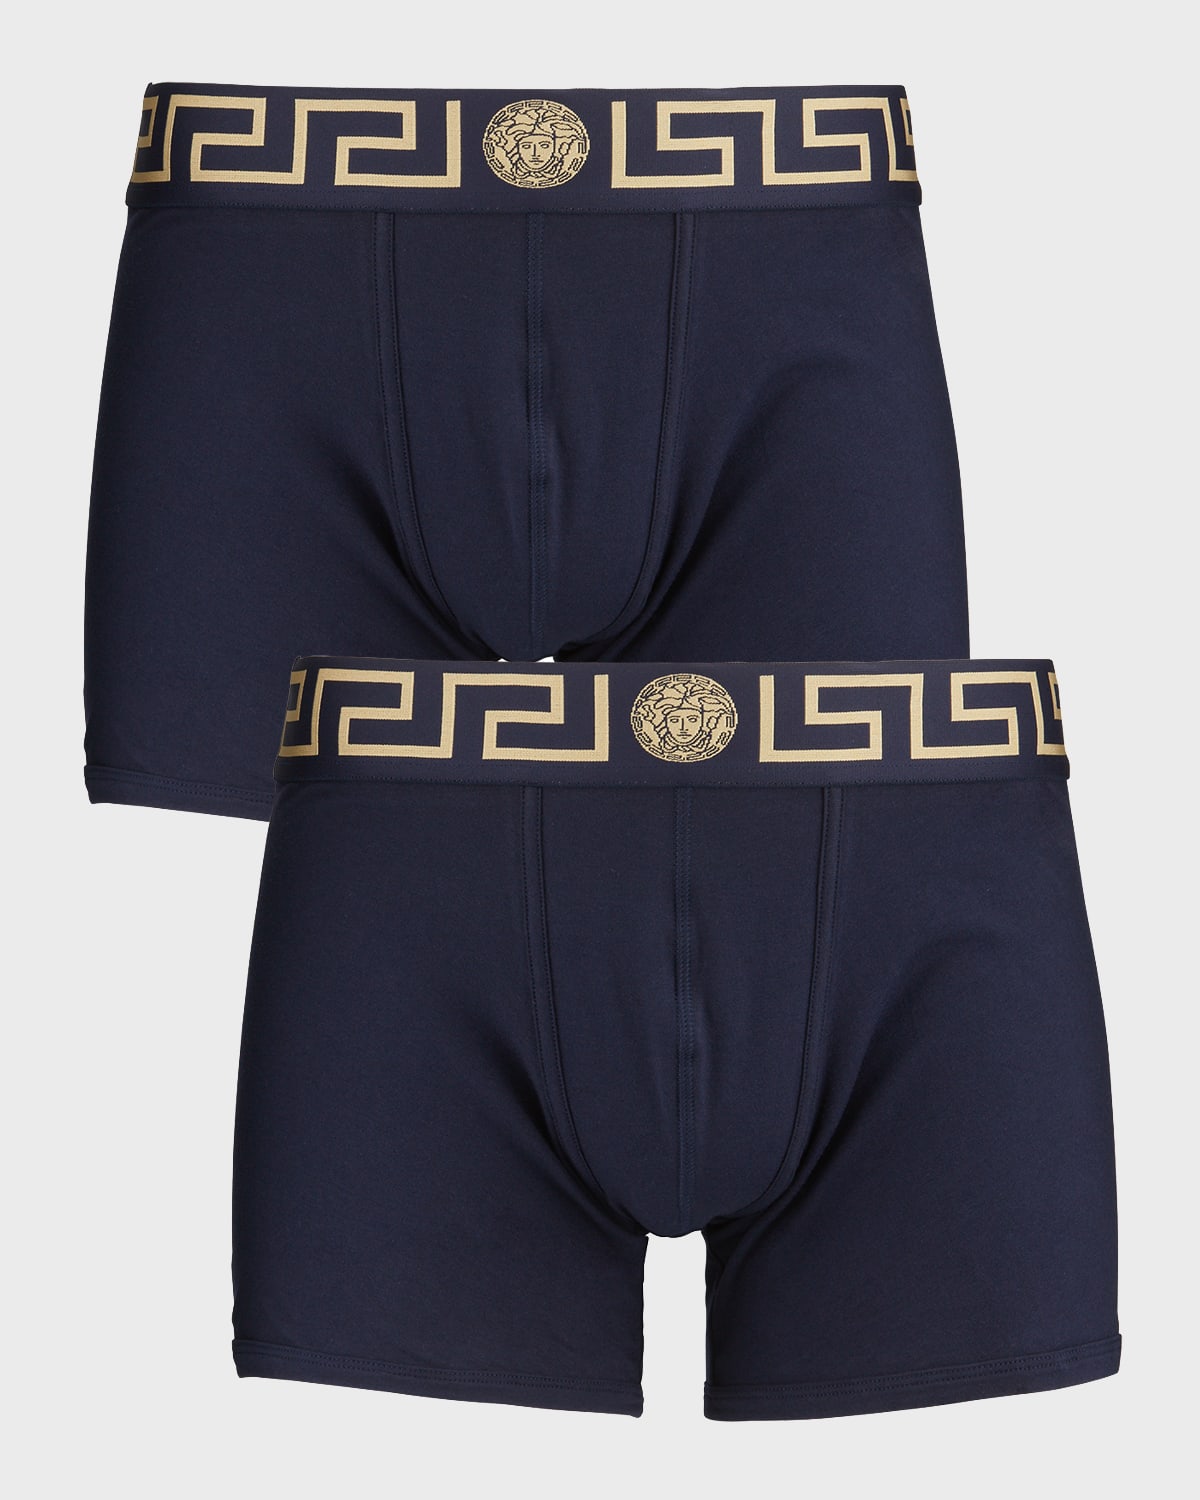 Versace Two-pack Greca Border Long Boxer Trunks In Blue/gold